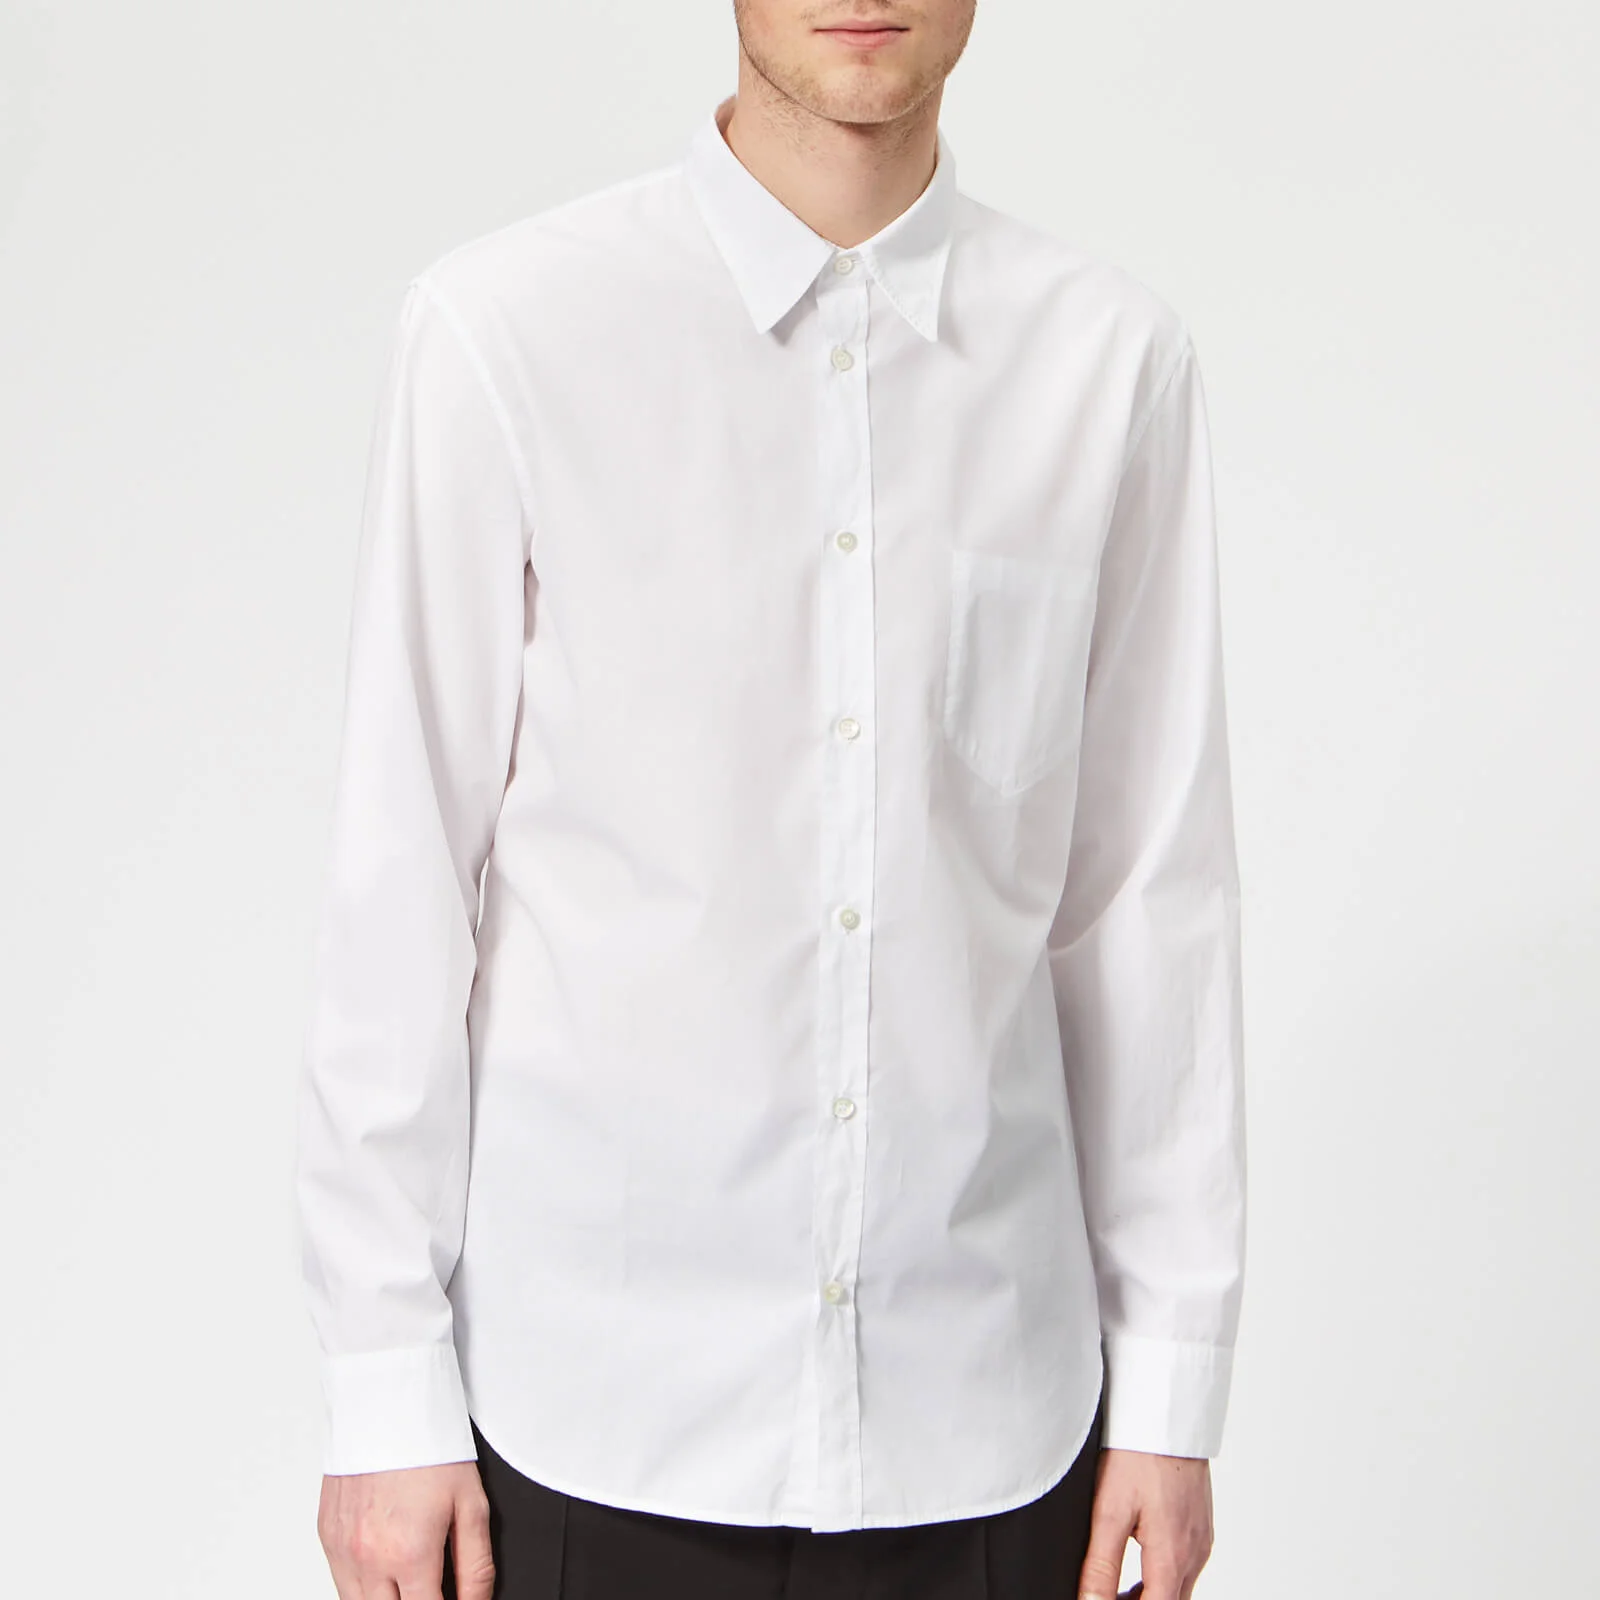 Maison Margiela Men's Slim Fit Garment Dyed Shirt - White Image 1